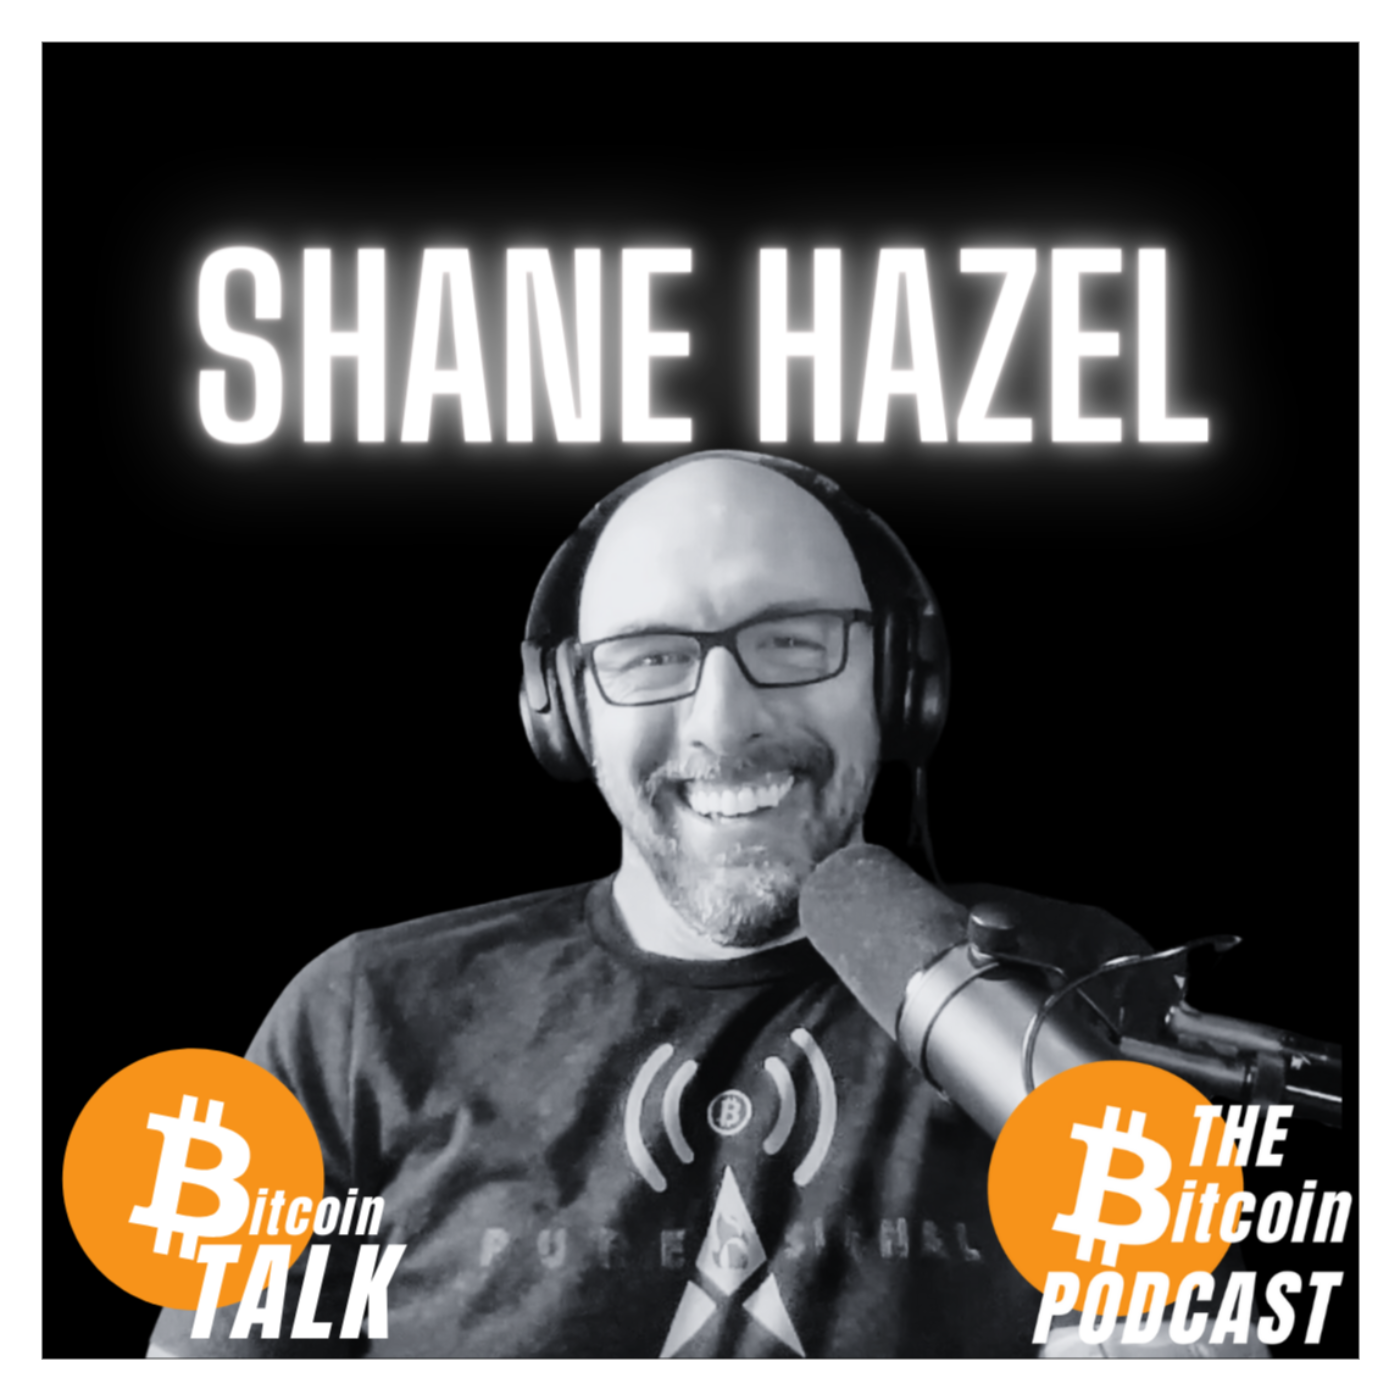 Homeschooling, Empires Collapsing, & Building A Bitcoin Legacy: Shane Hazel (Bitcoin Talk on THE Bitcoin Podcast)